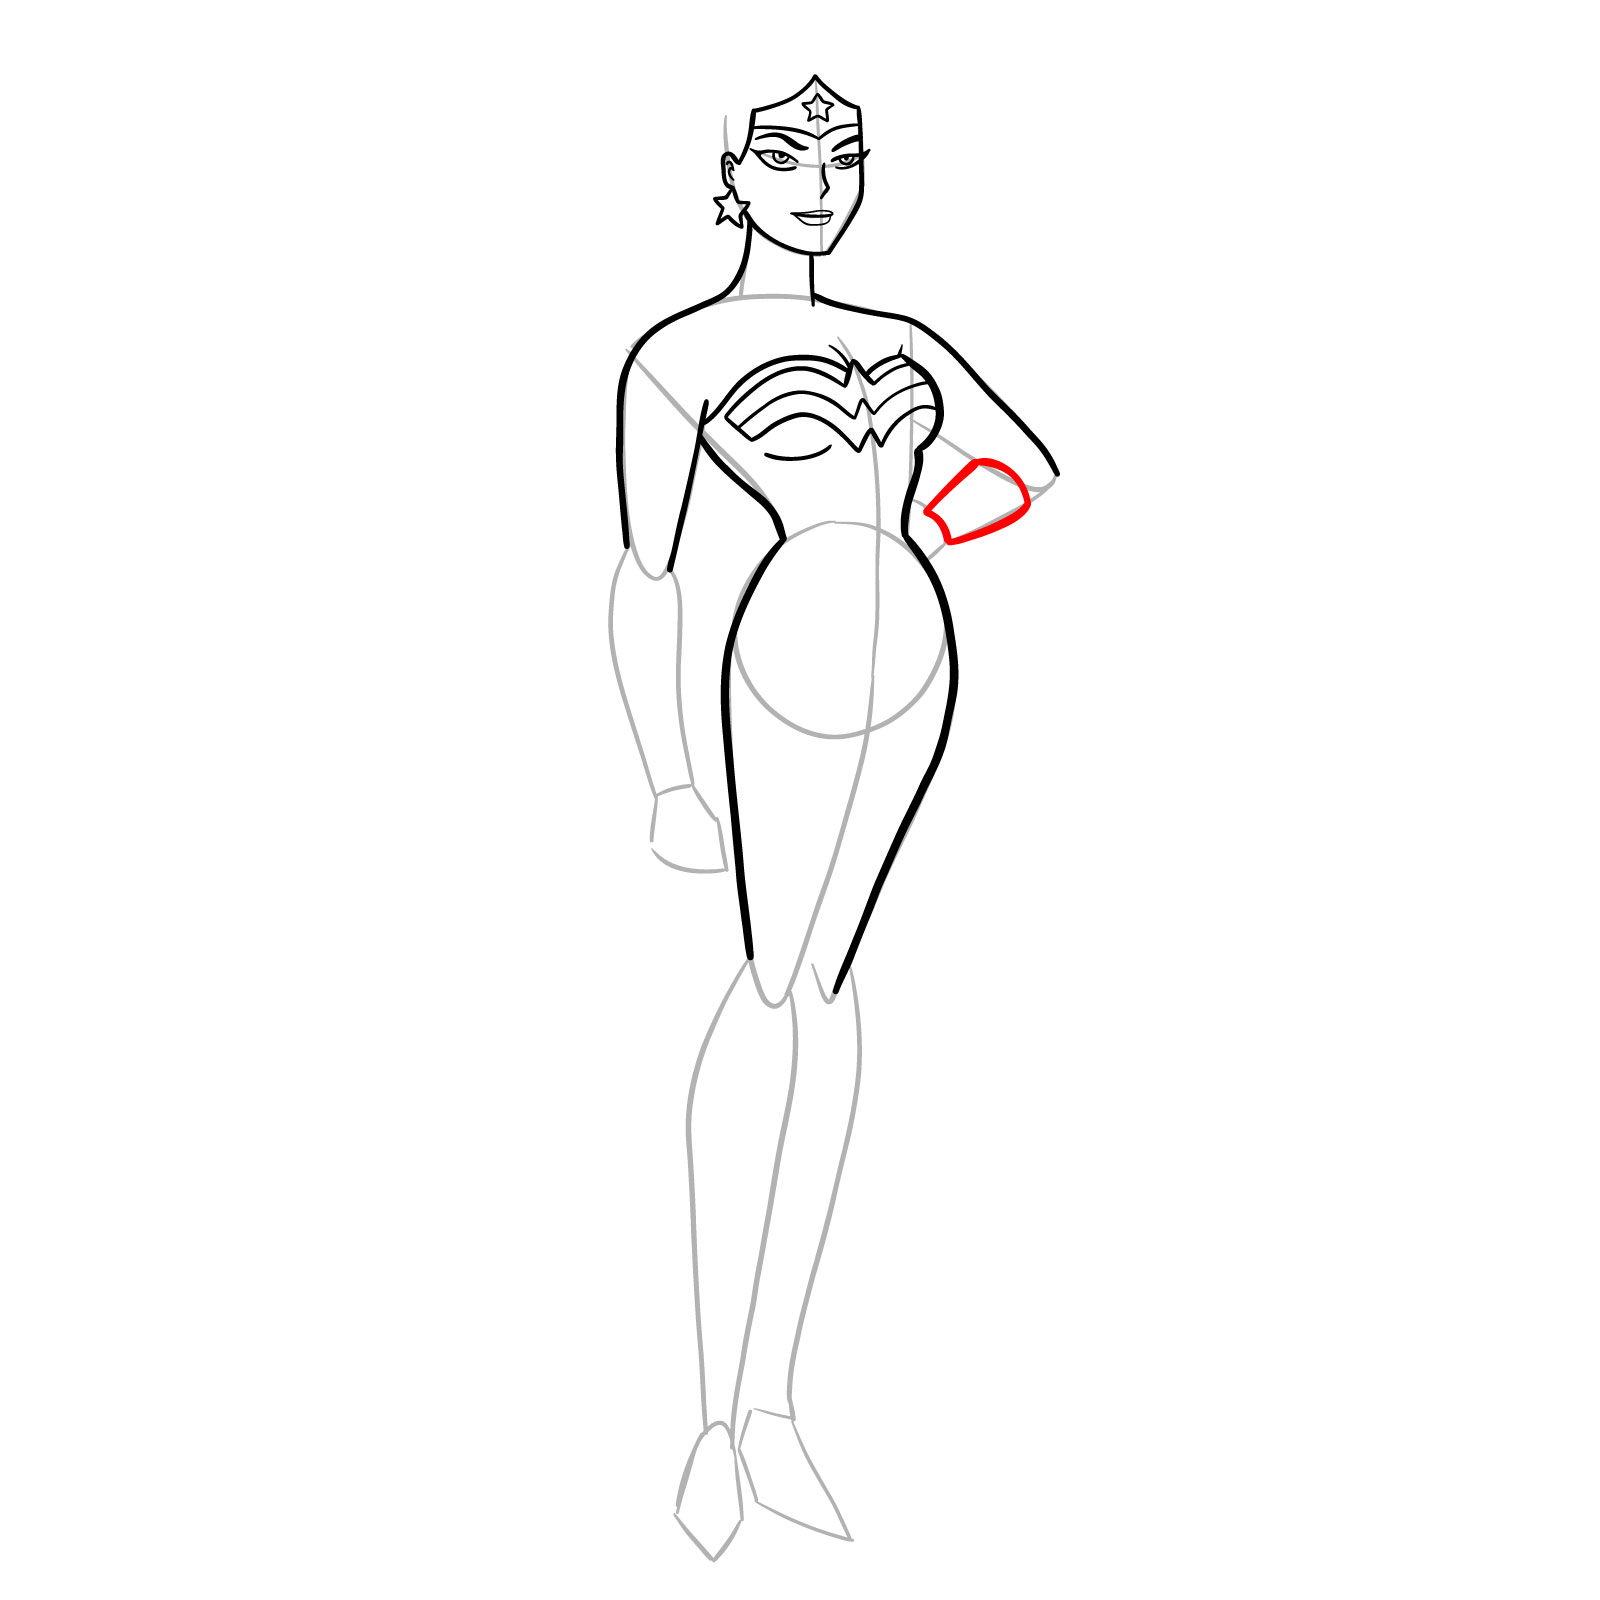 How to draw Wonder Woman cartoon style - step 17